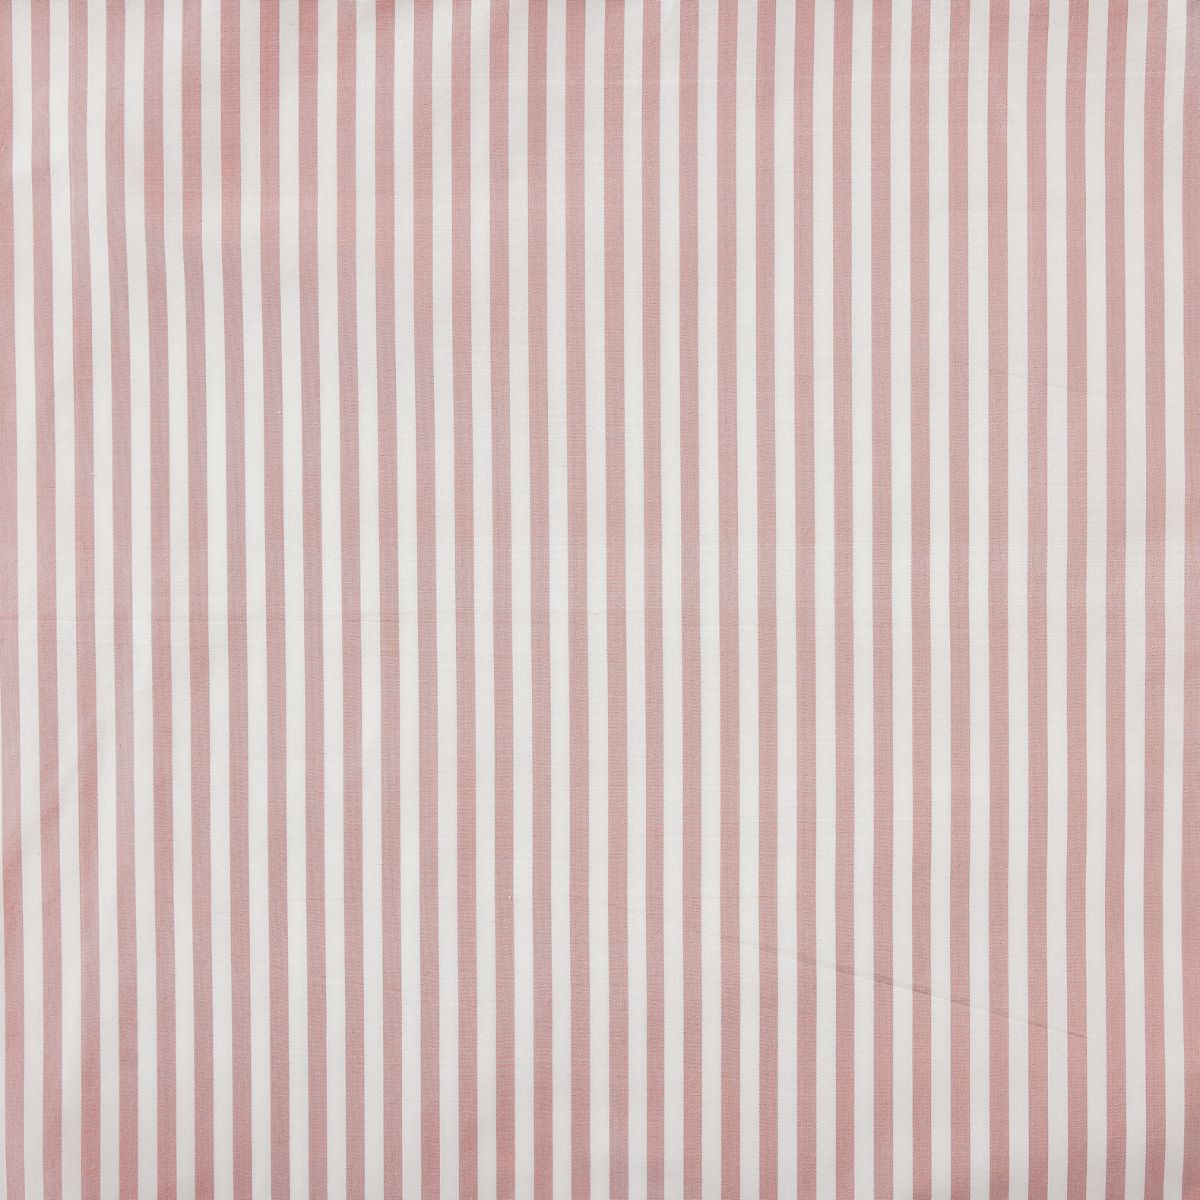 Noelle Stripe in Blush Fabric Swatch